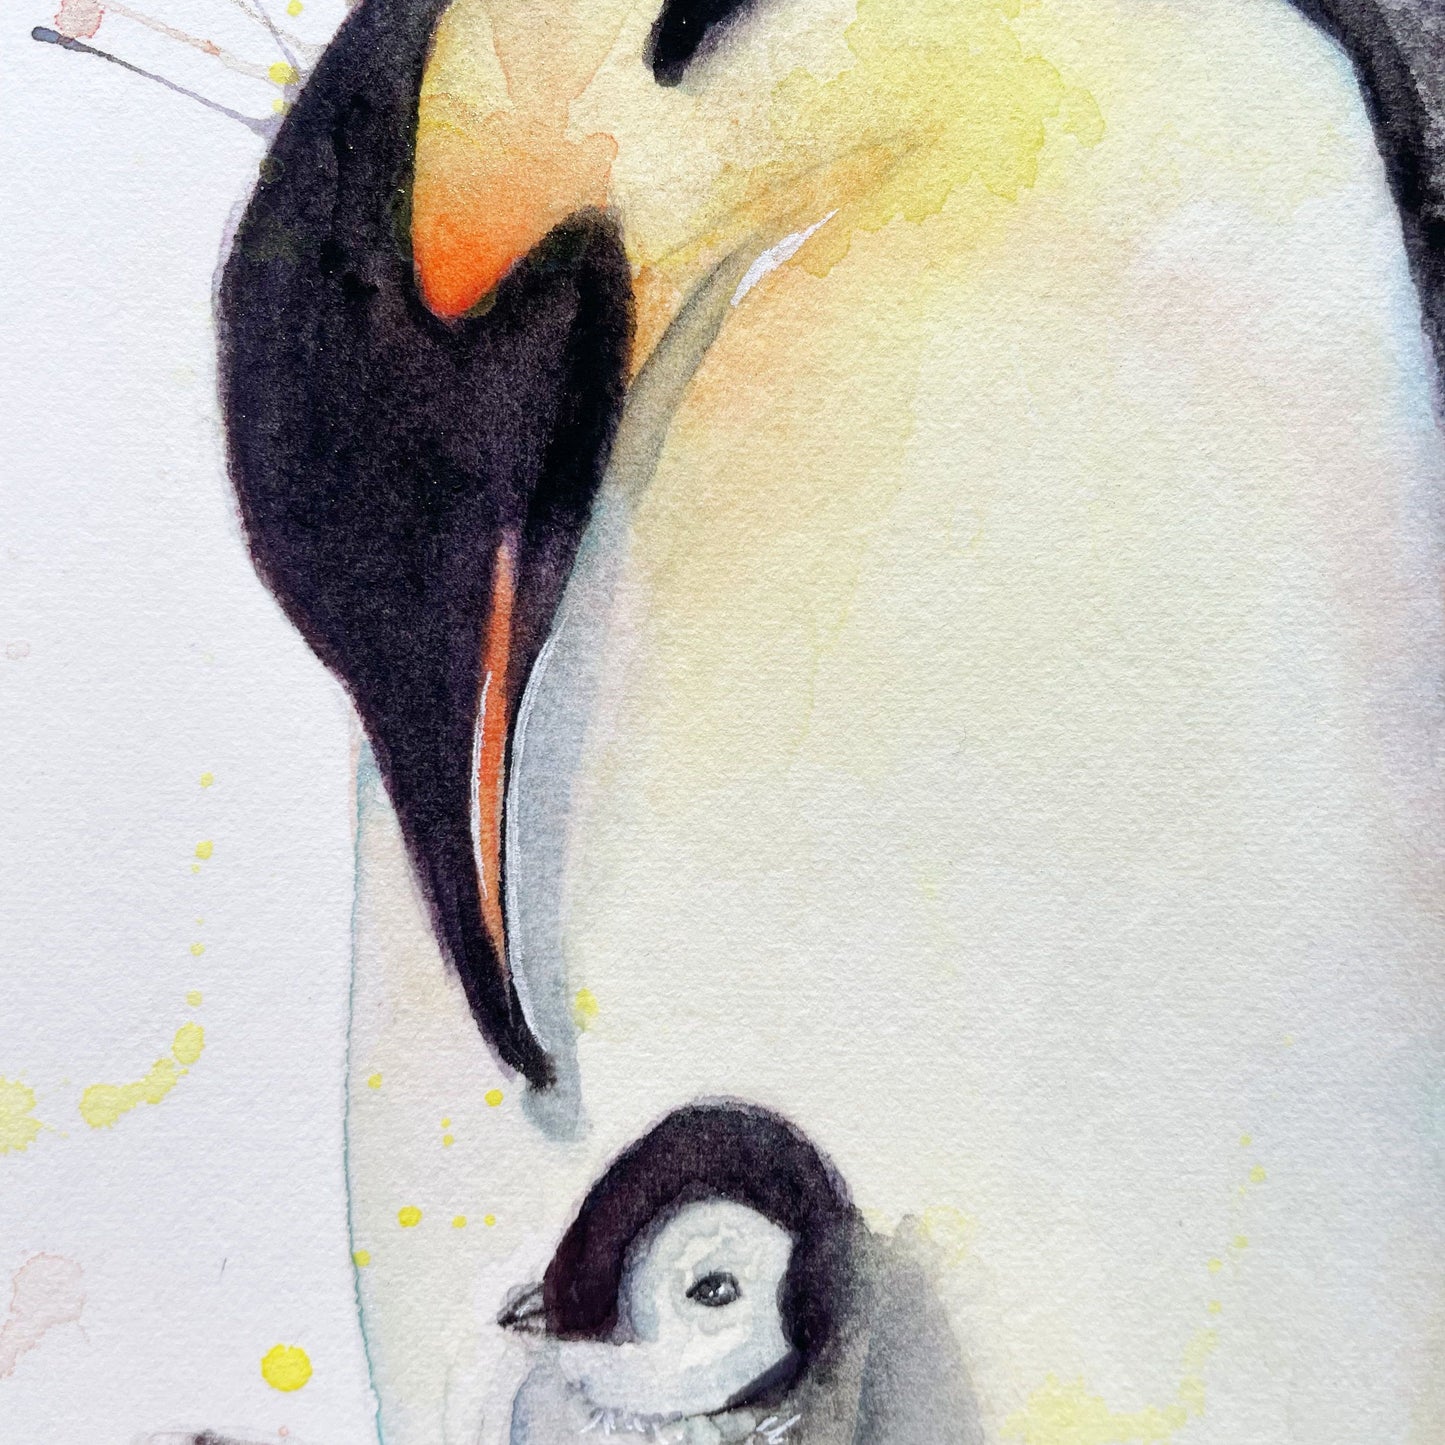 Original Watercolour Penguin Mum and Baby Painting Art